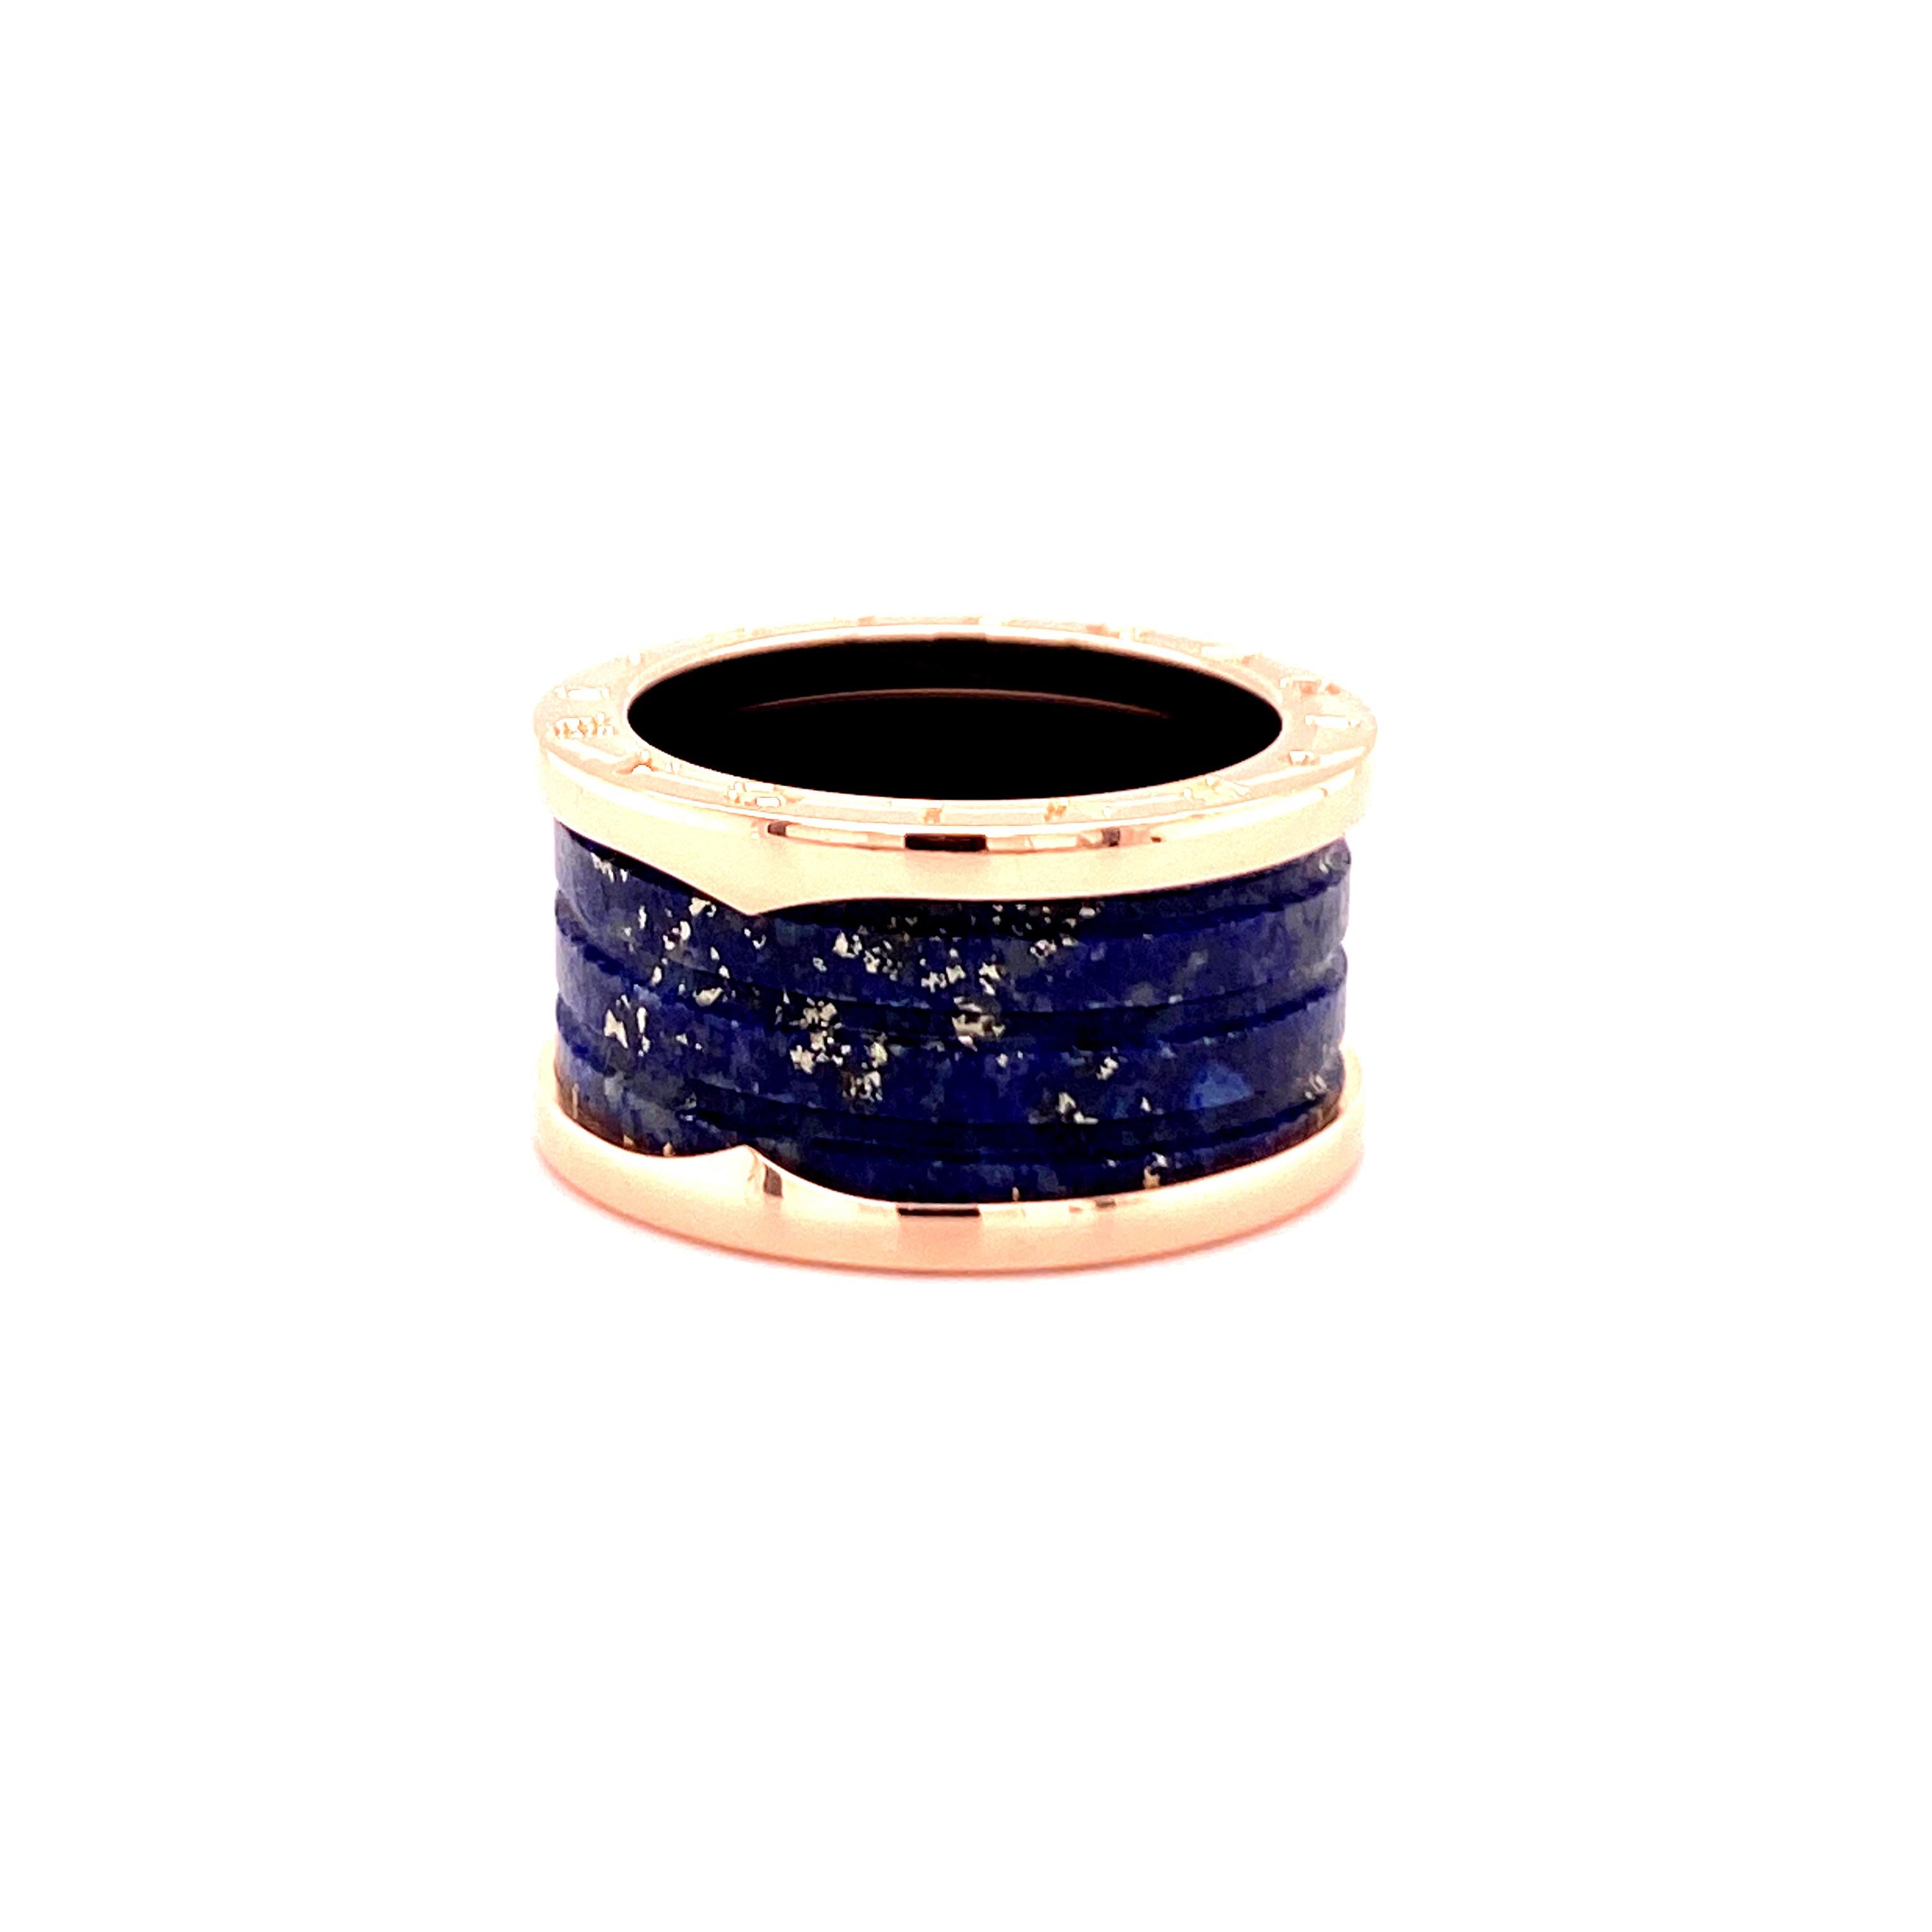 Timeless B.Zero Lapis Lazuli band ring by Bulgari in 18 karat rose gold.

B.Zero1 Collection
Ring Size: 55 (EU), 7.5 (US)
Width: 12 mm, 0.47 in
Stamped Hallmarks: Bvlgari 750 55 A916W2 Made in Italy